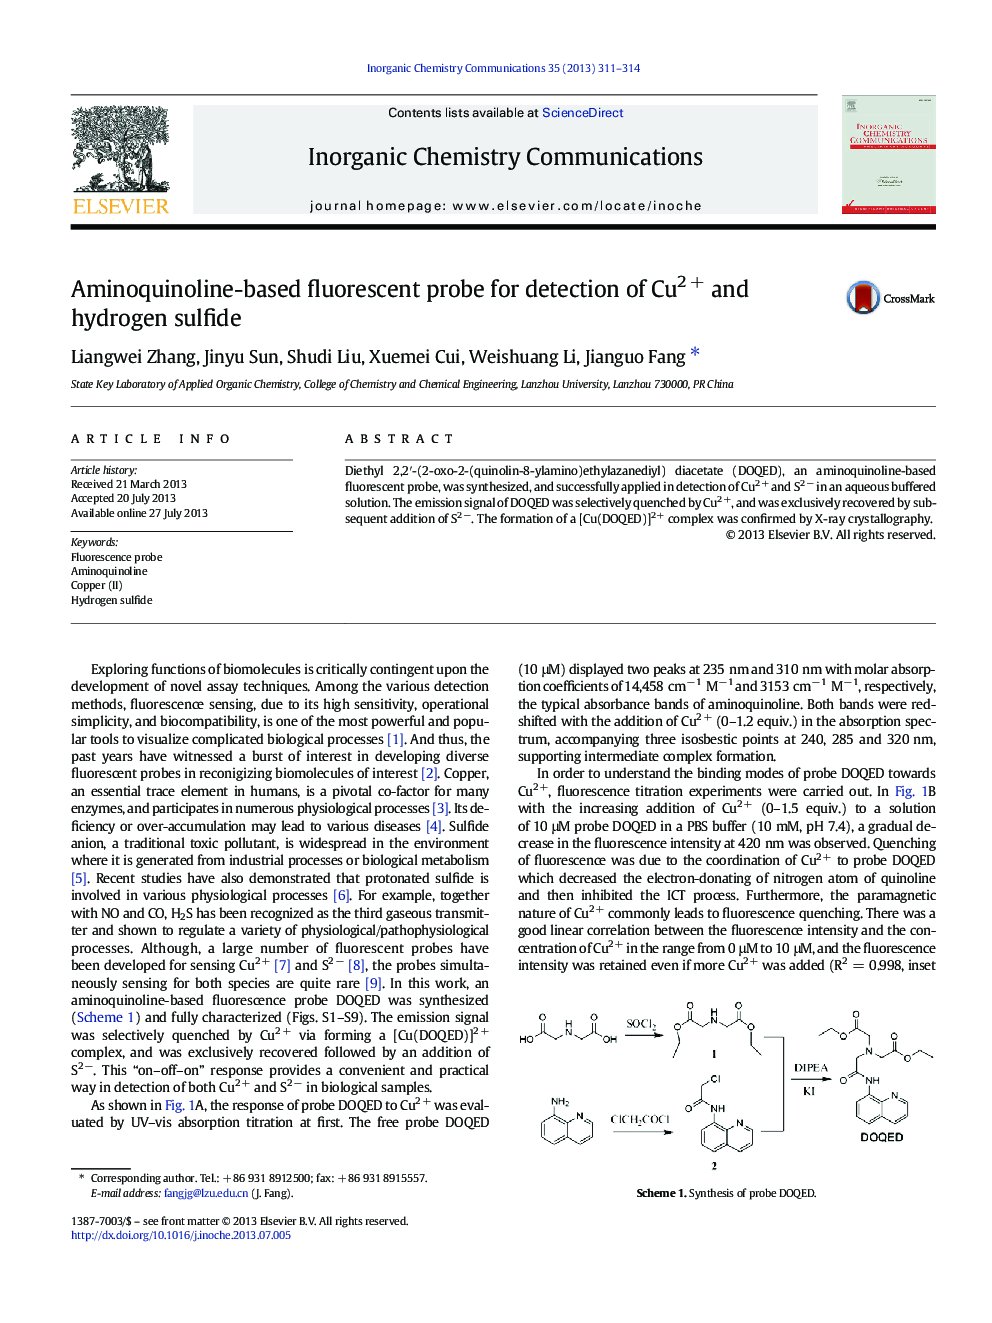 Aminoquinoline-based fluorescent probe for detection of Cu2 + and hydrogen sulfide